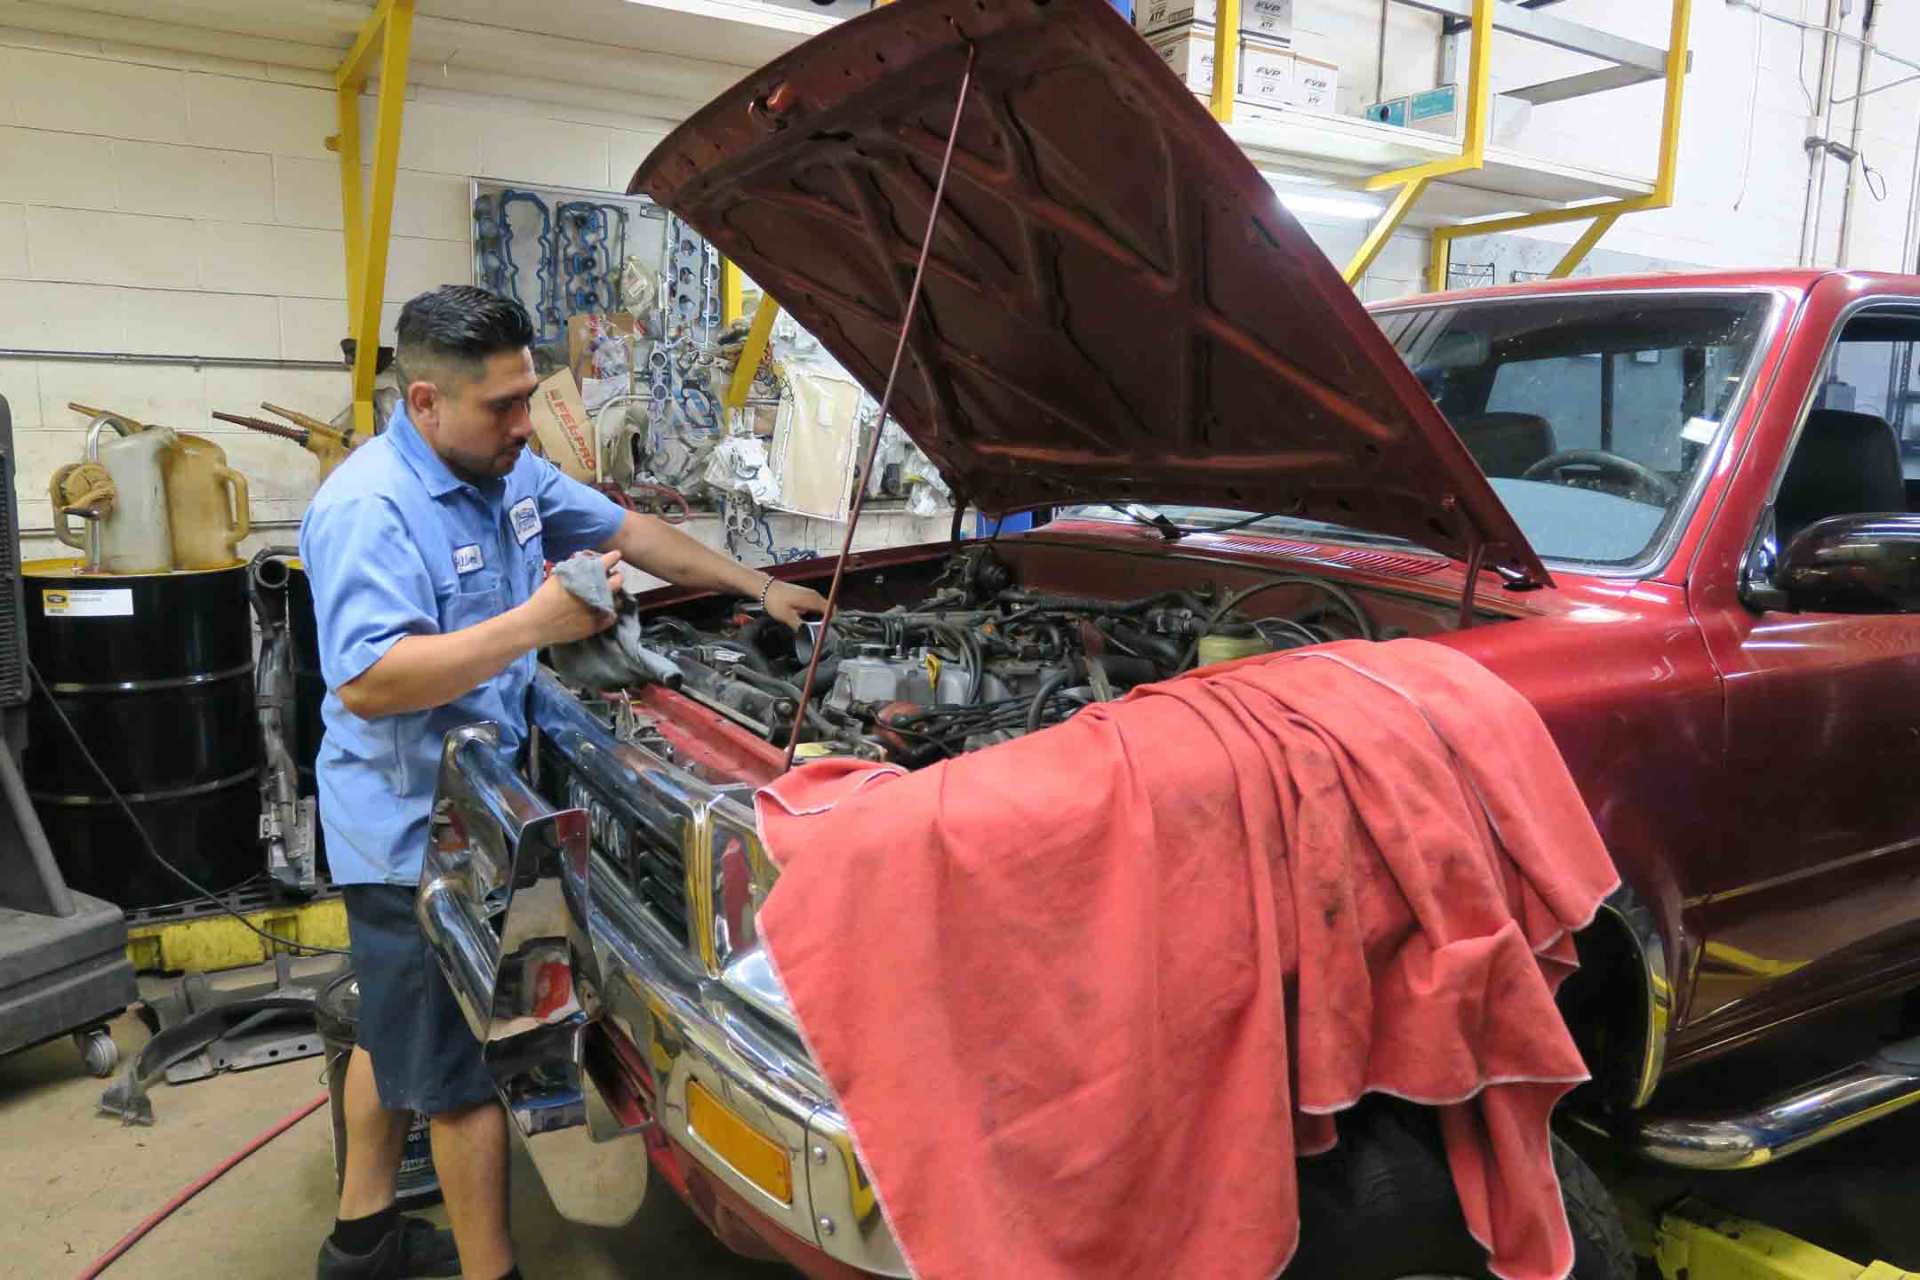 Mechanic — Employee Fixing Car Engine in Ontario, California